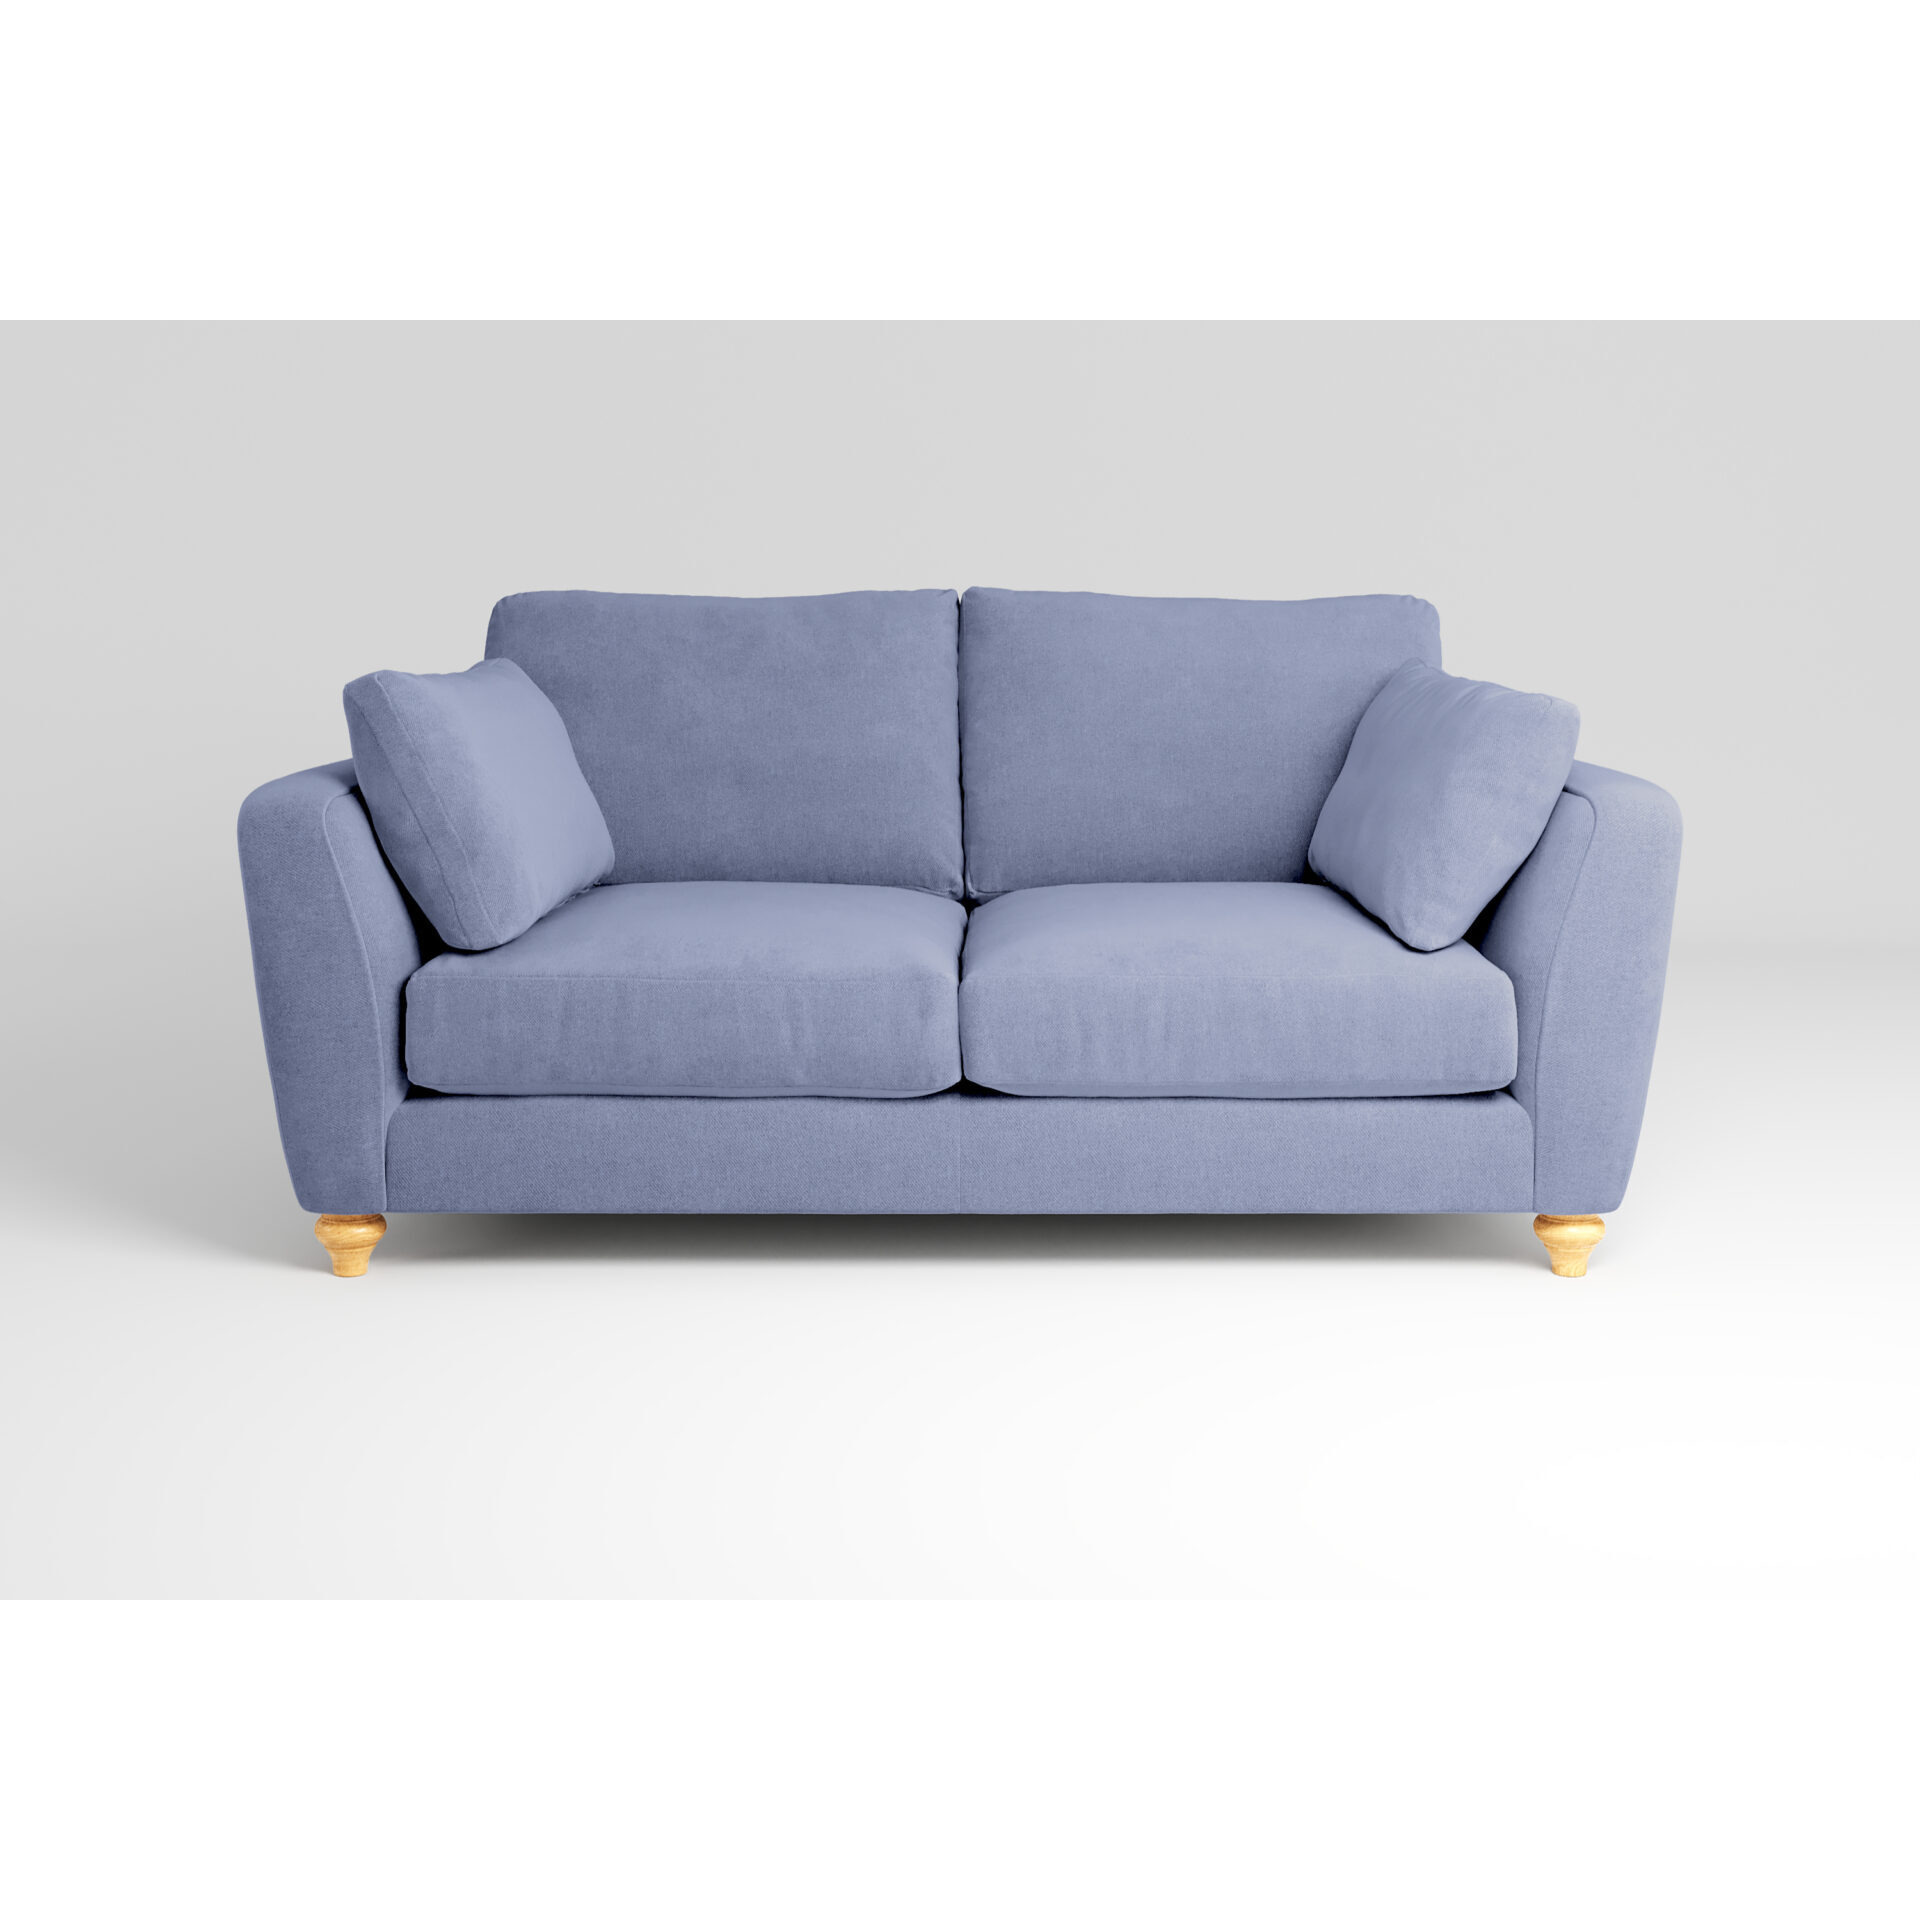 Daydream - 3 Seater Sofa in Brushed Wool Feel Denim